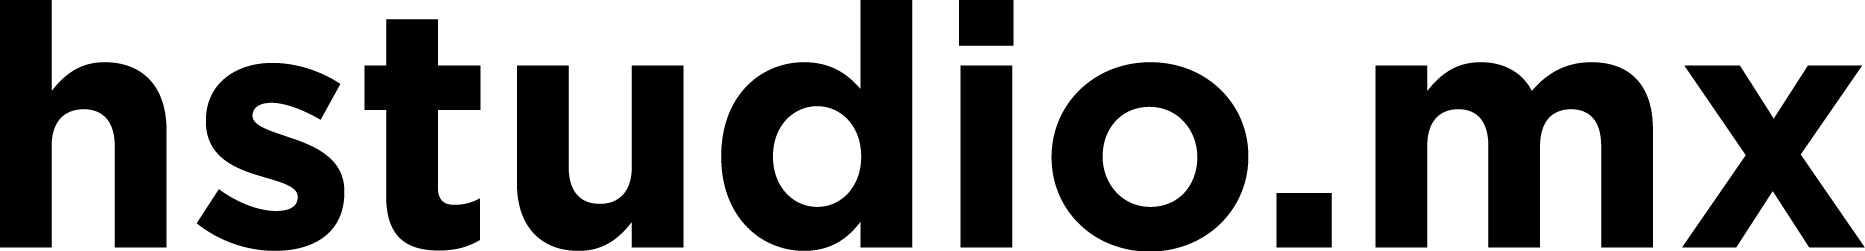 HSTUDIOMX_logo